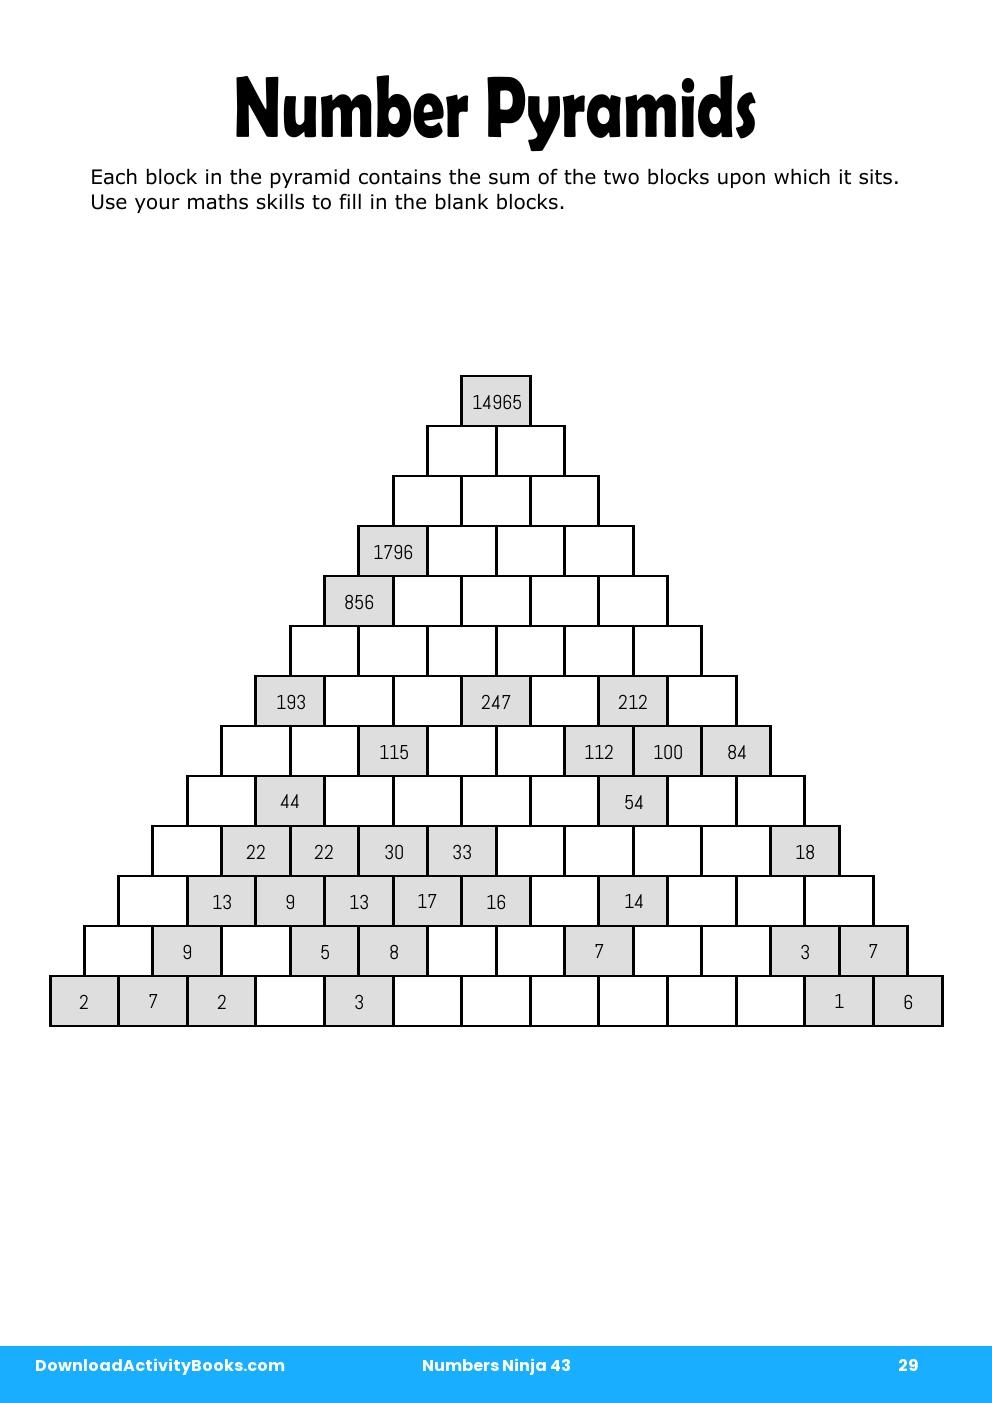 Number Pyramids in Numbers Ninja 43